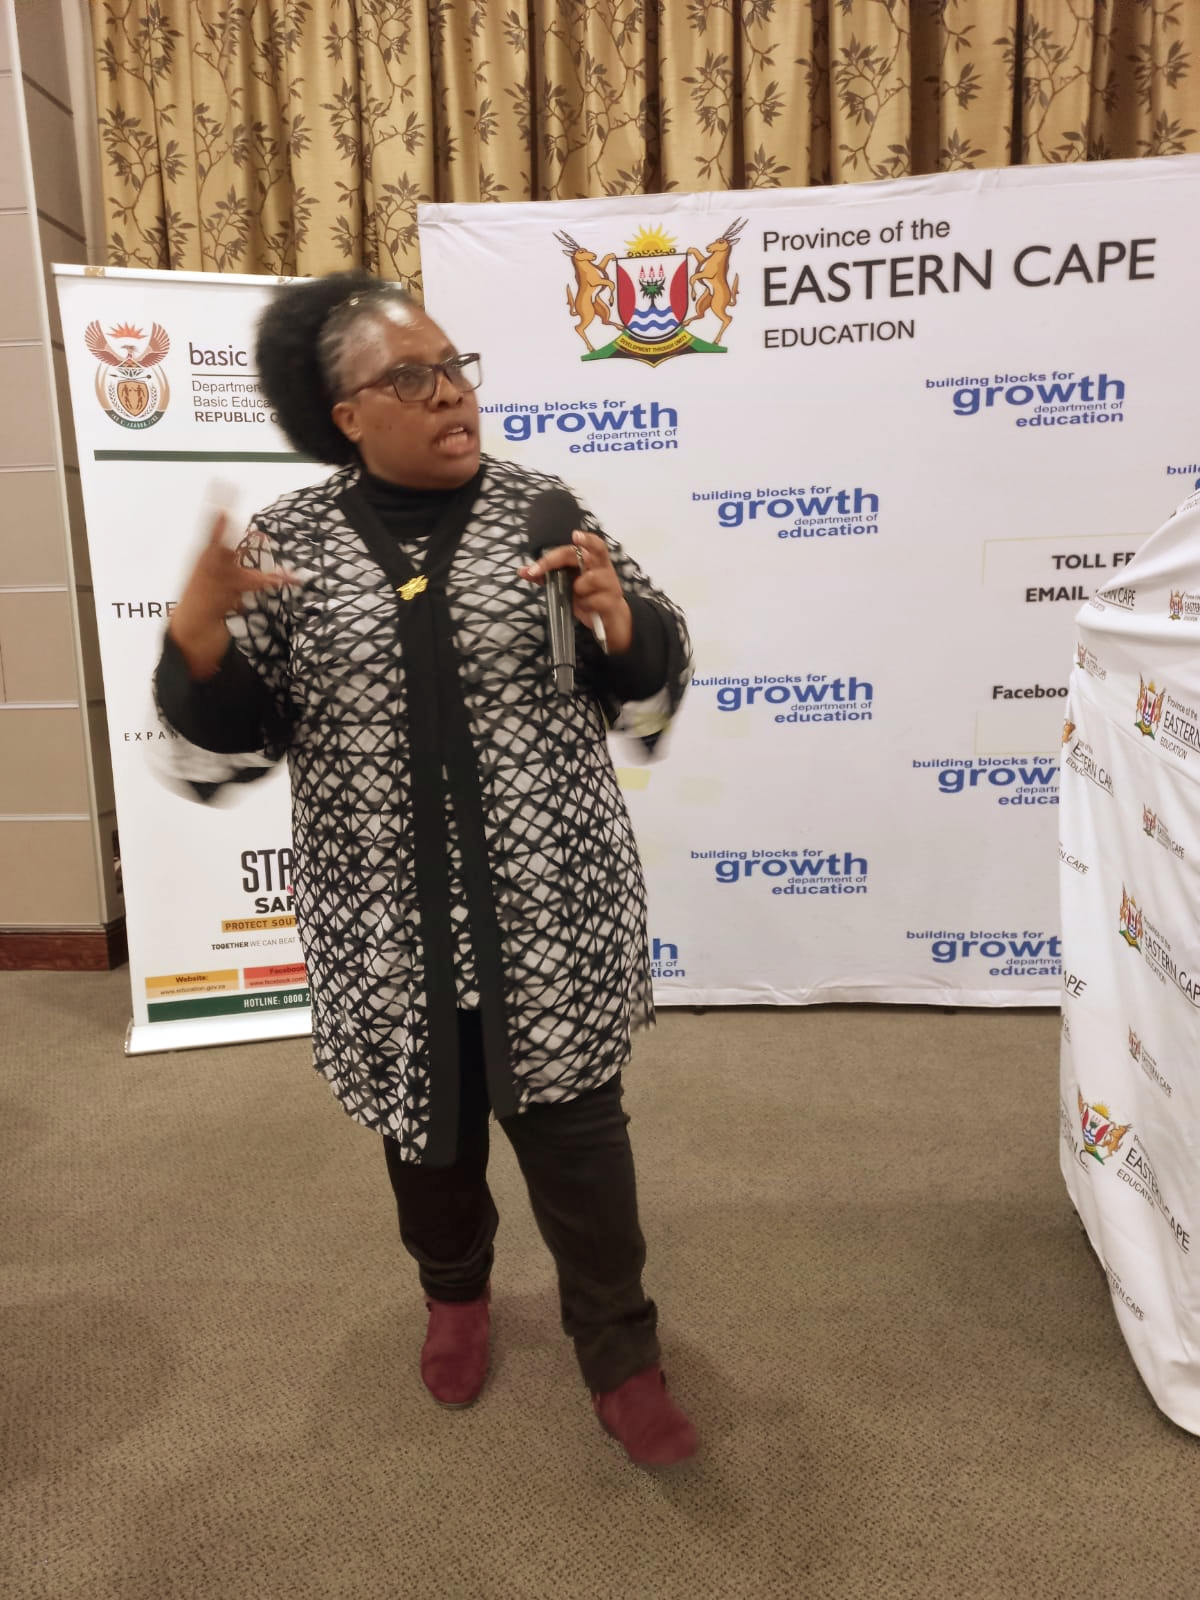 Dr Rethabile Mawela presents at the seminar